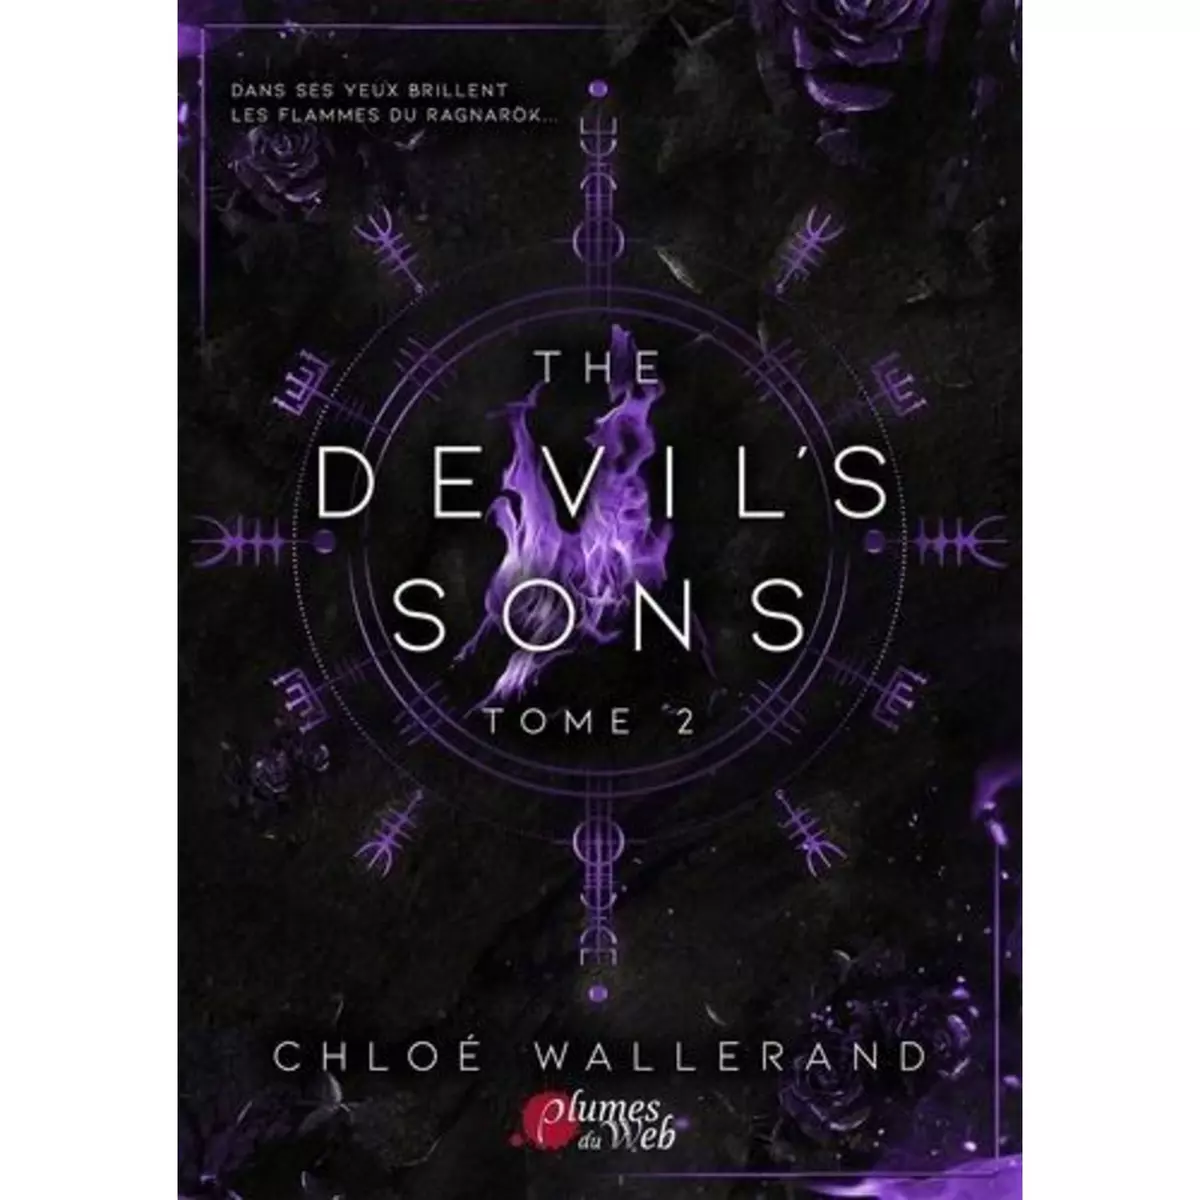  THE DEVIL'S SONS TOME 2 , Wallerand Chloé